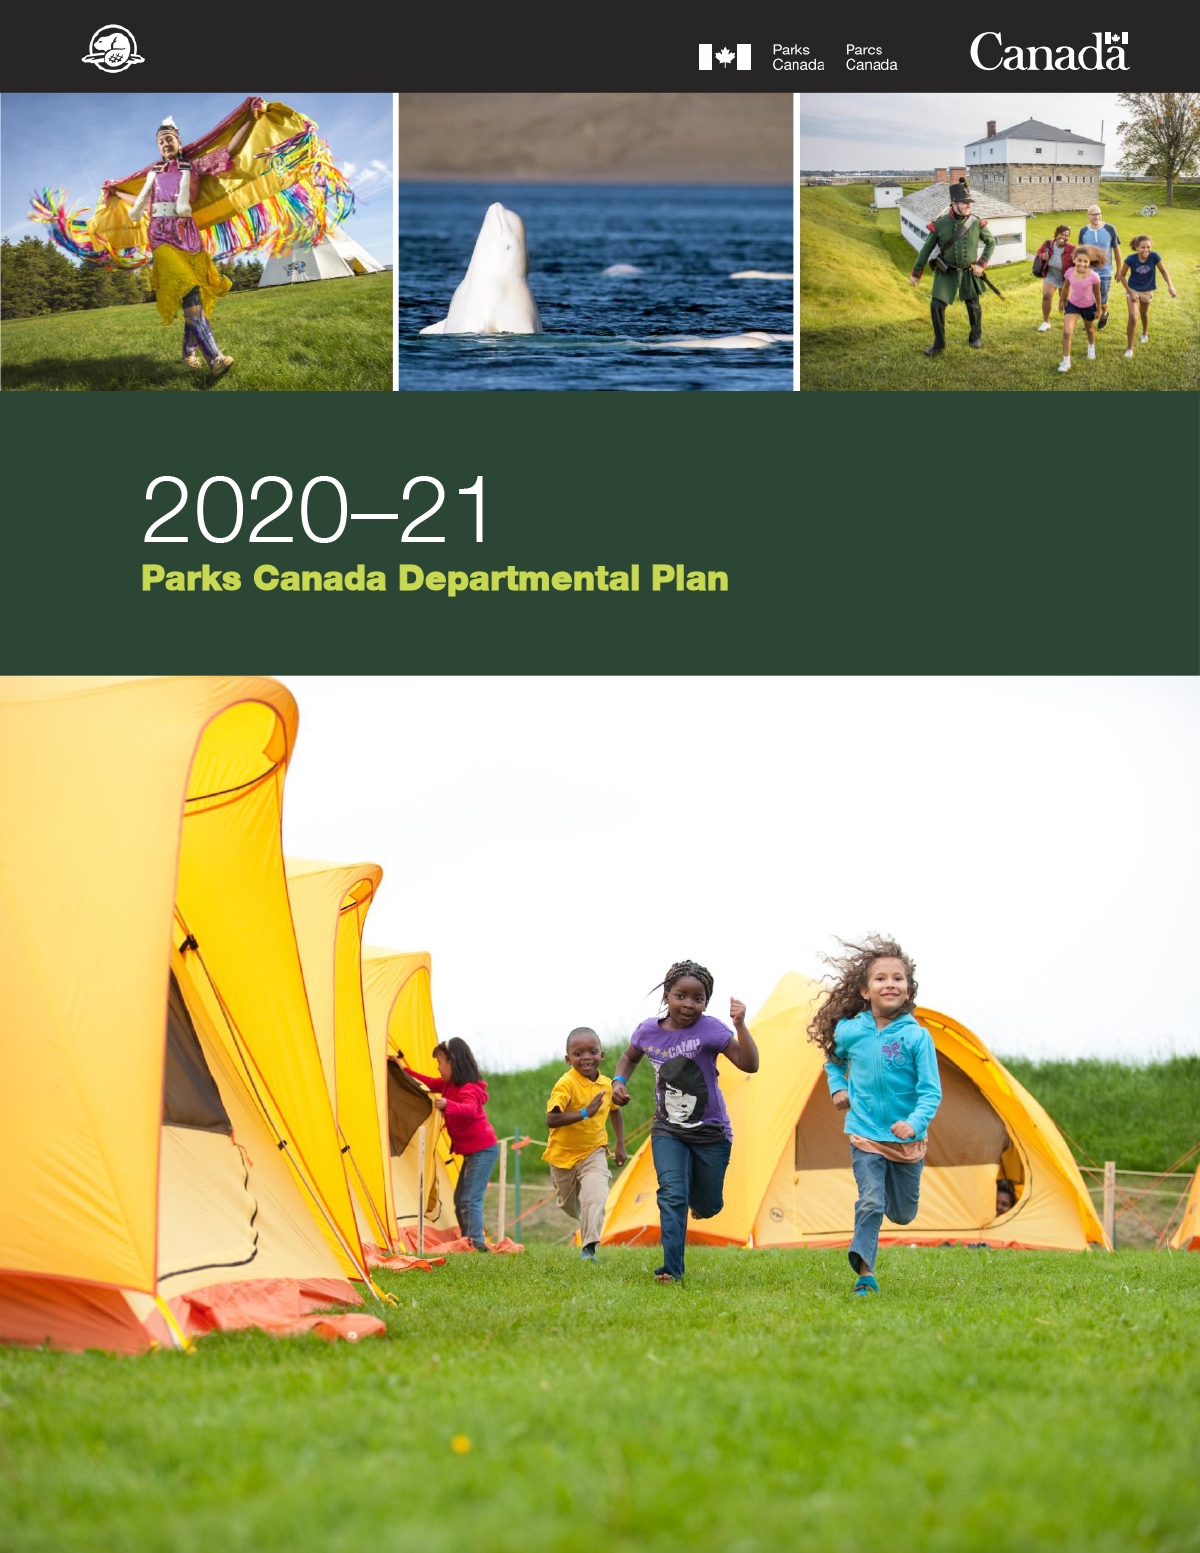 Parks Canada Departmental Plan 2020-21